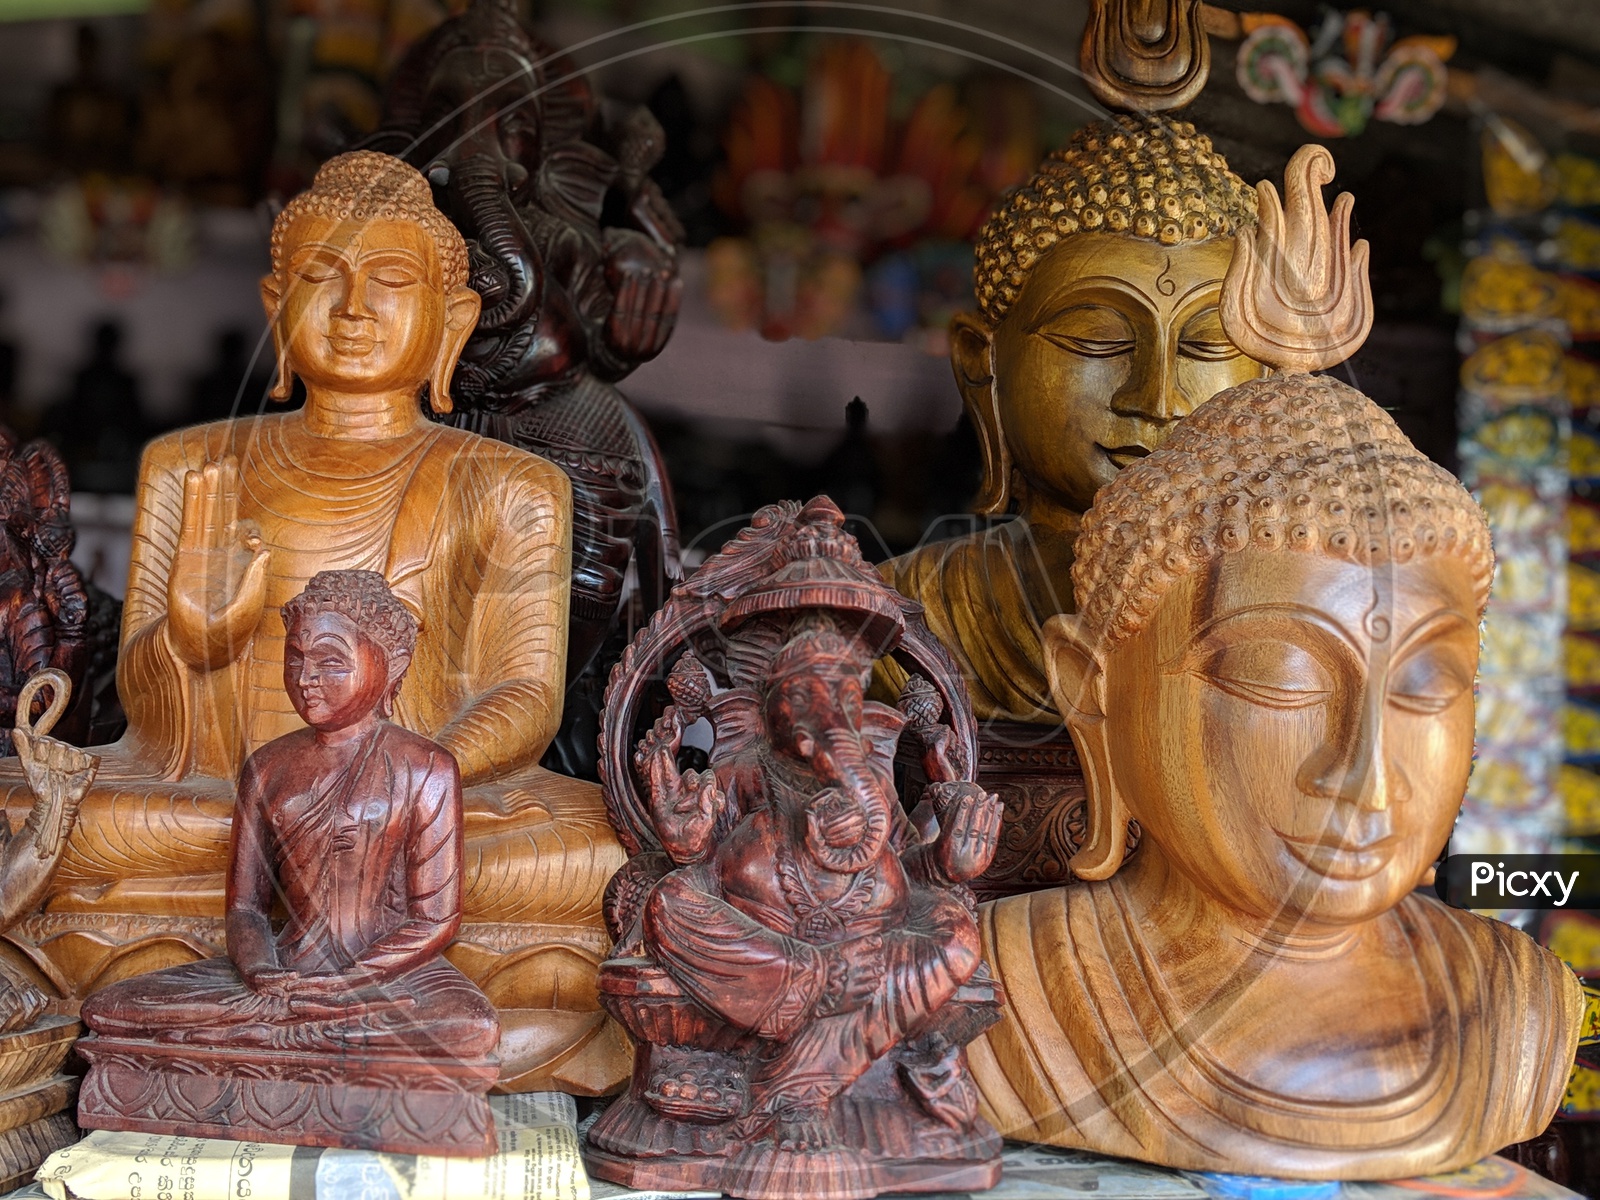 Buddha Idols on Sri Lanka street shops/stores